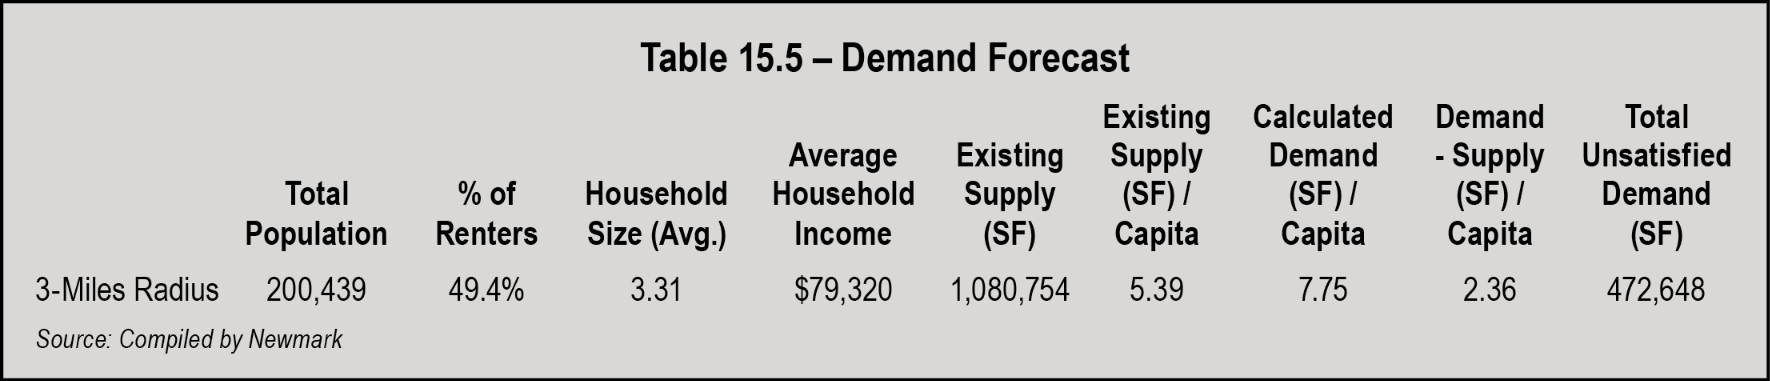 Table 15.5 - Demand Forecast